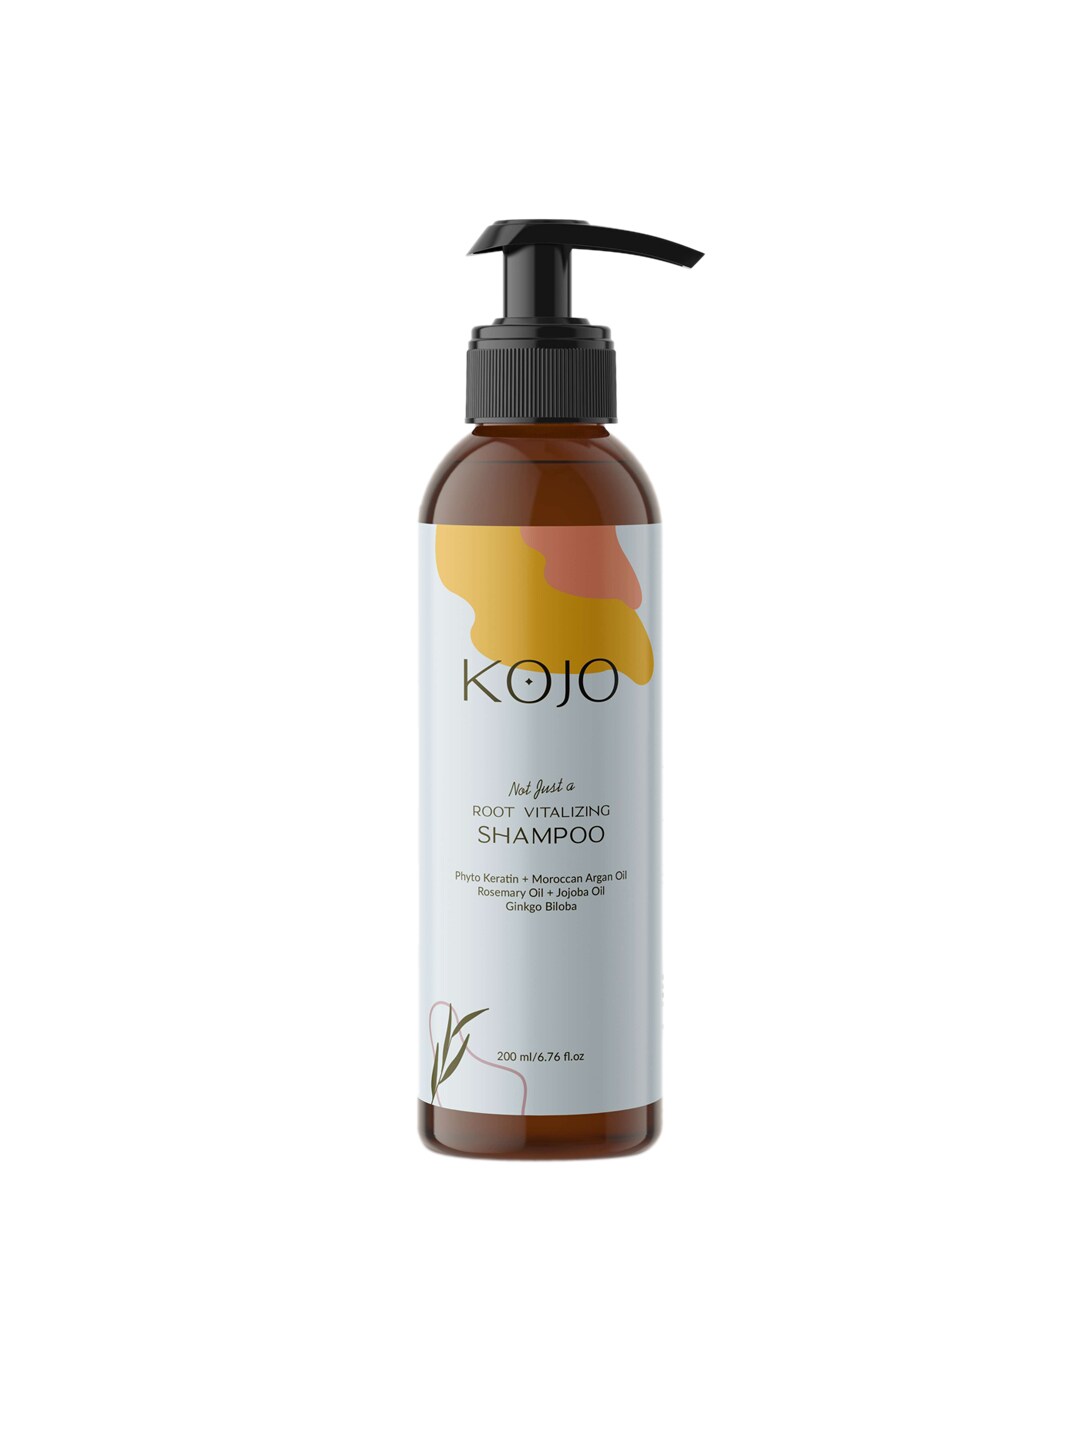 KOJO Root Vitalizing Shampoo 200ml Price in India